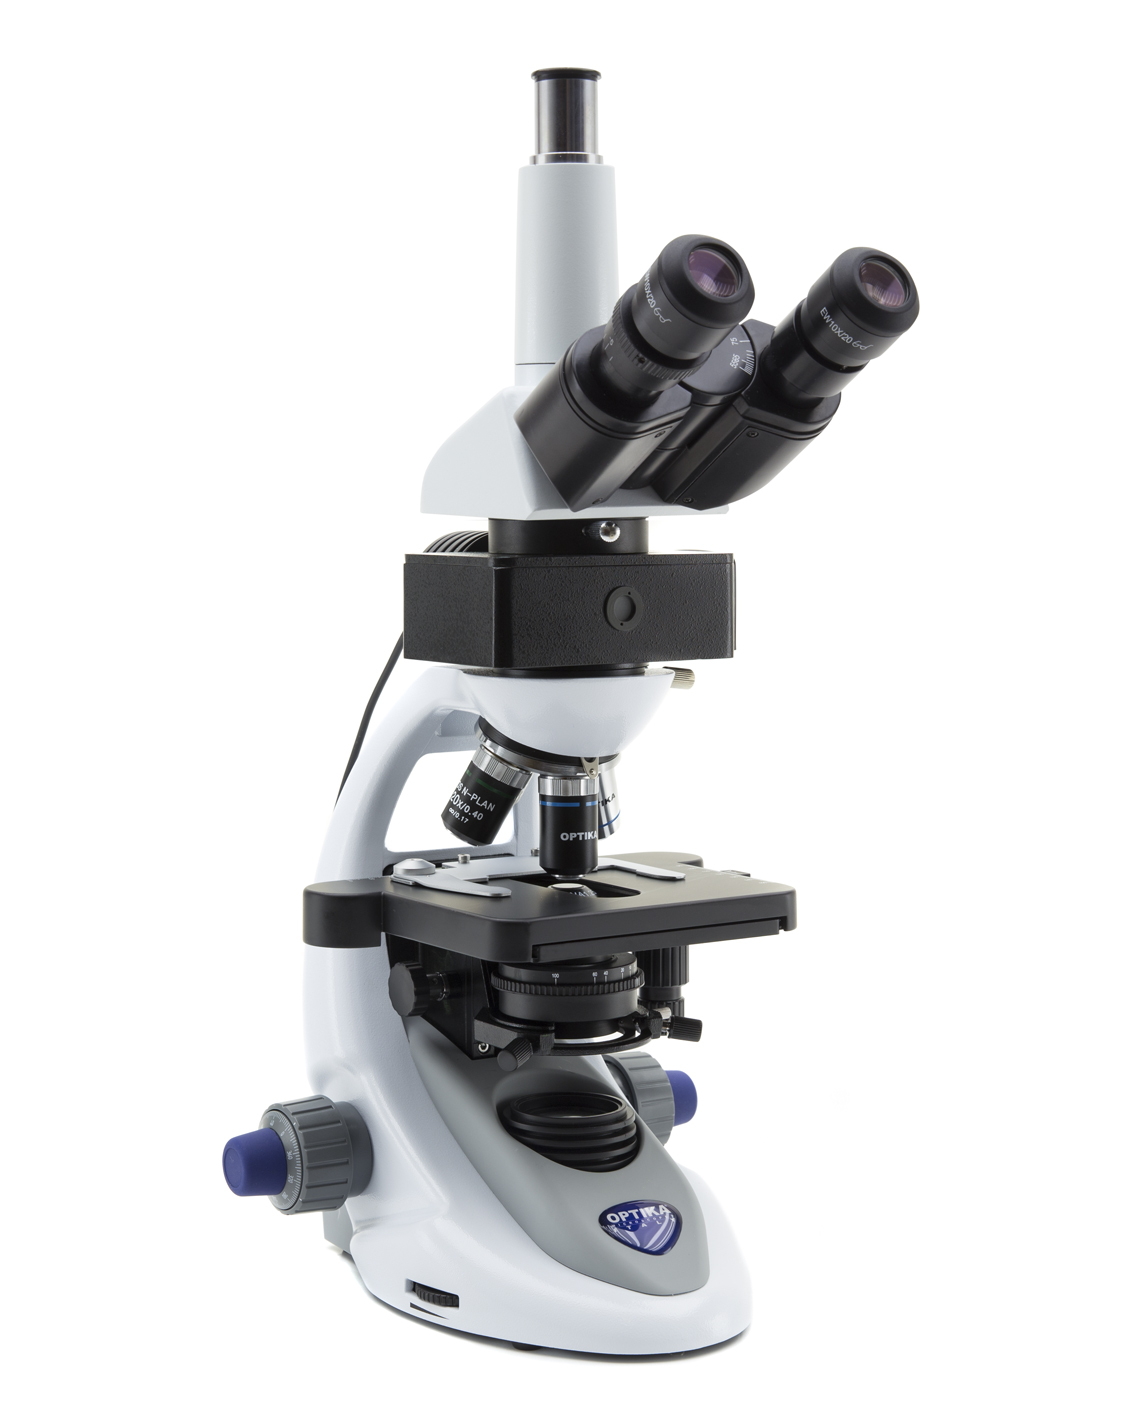 B-293LD1 - Laboratorn trinokulrn mikroskop